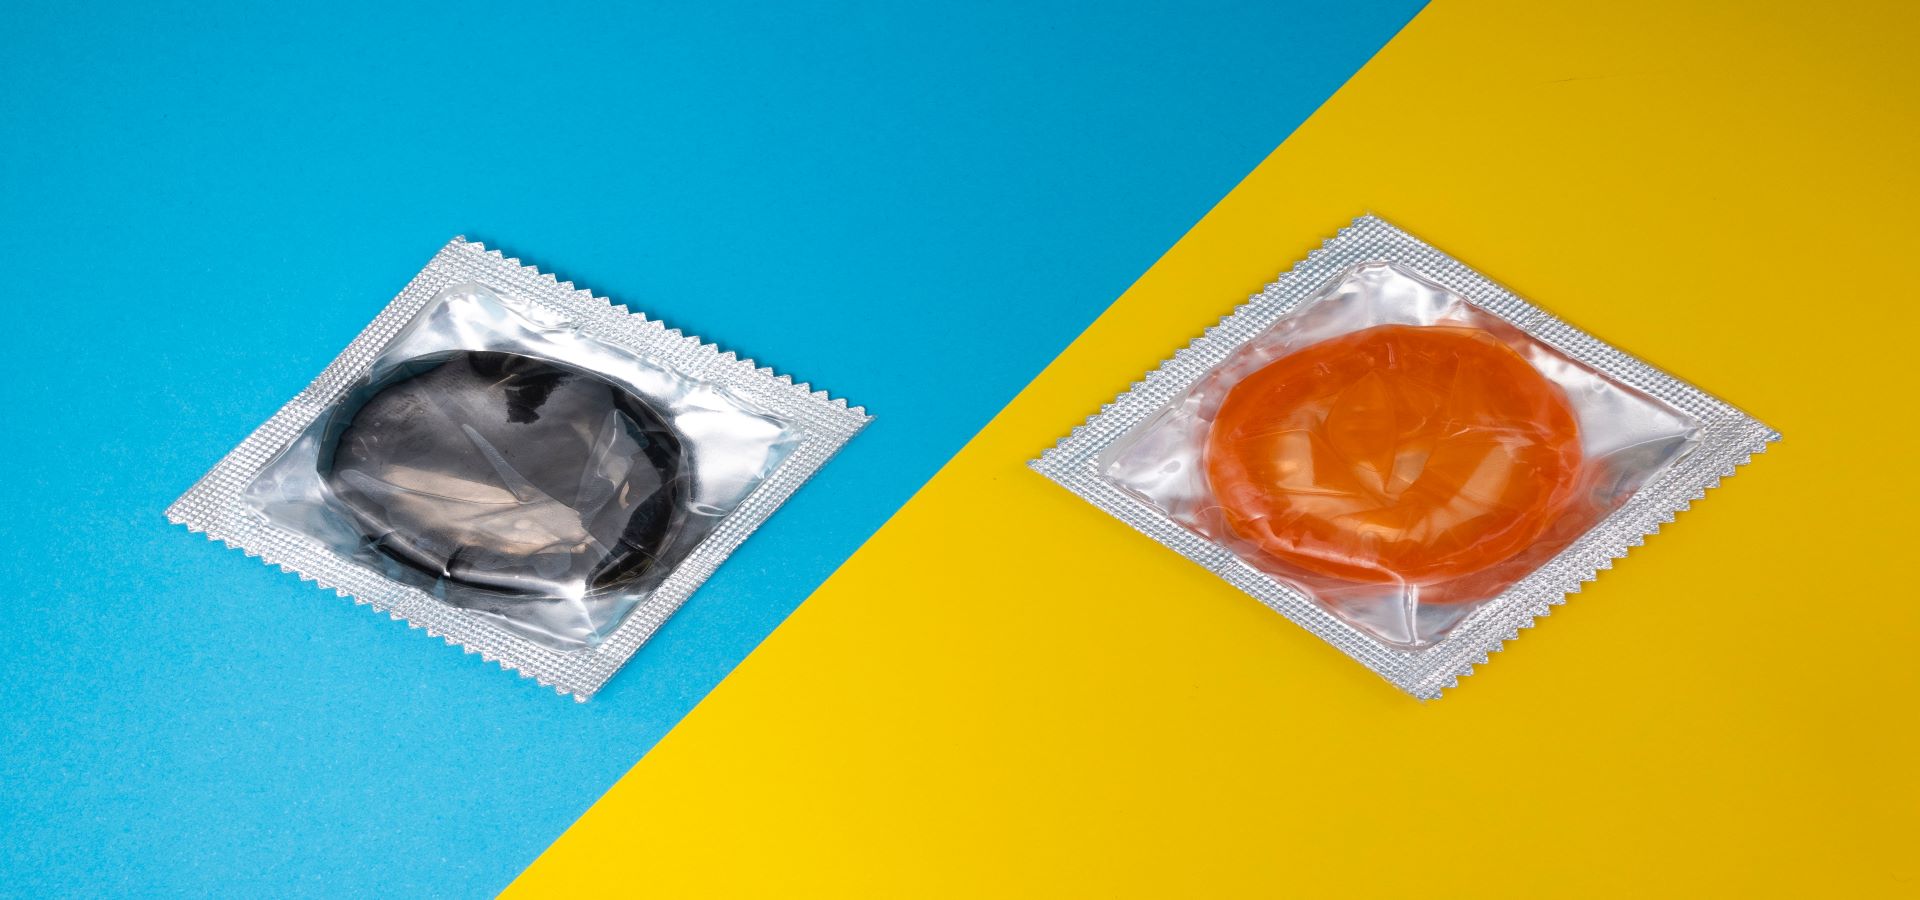 International Condom Day